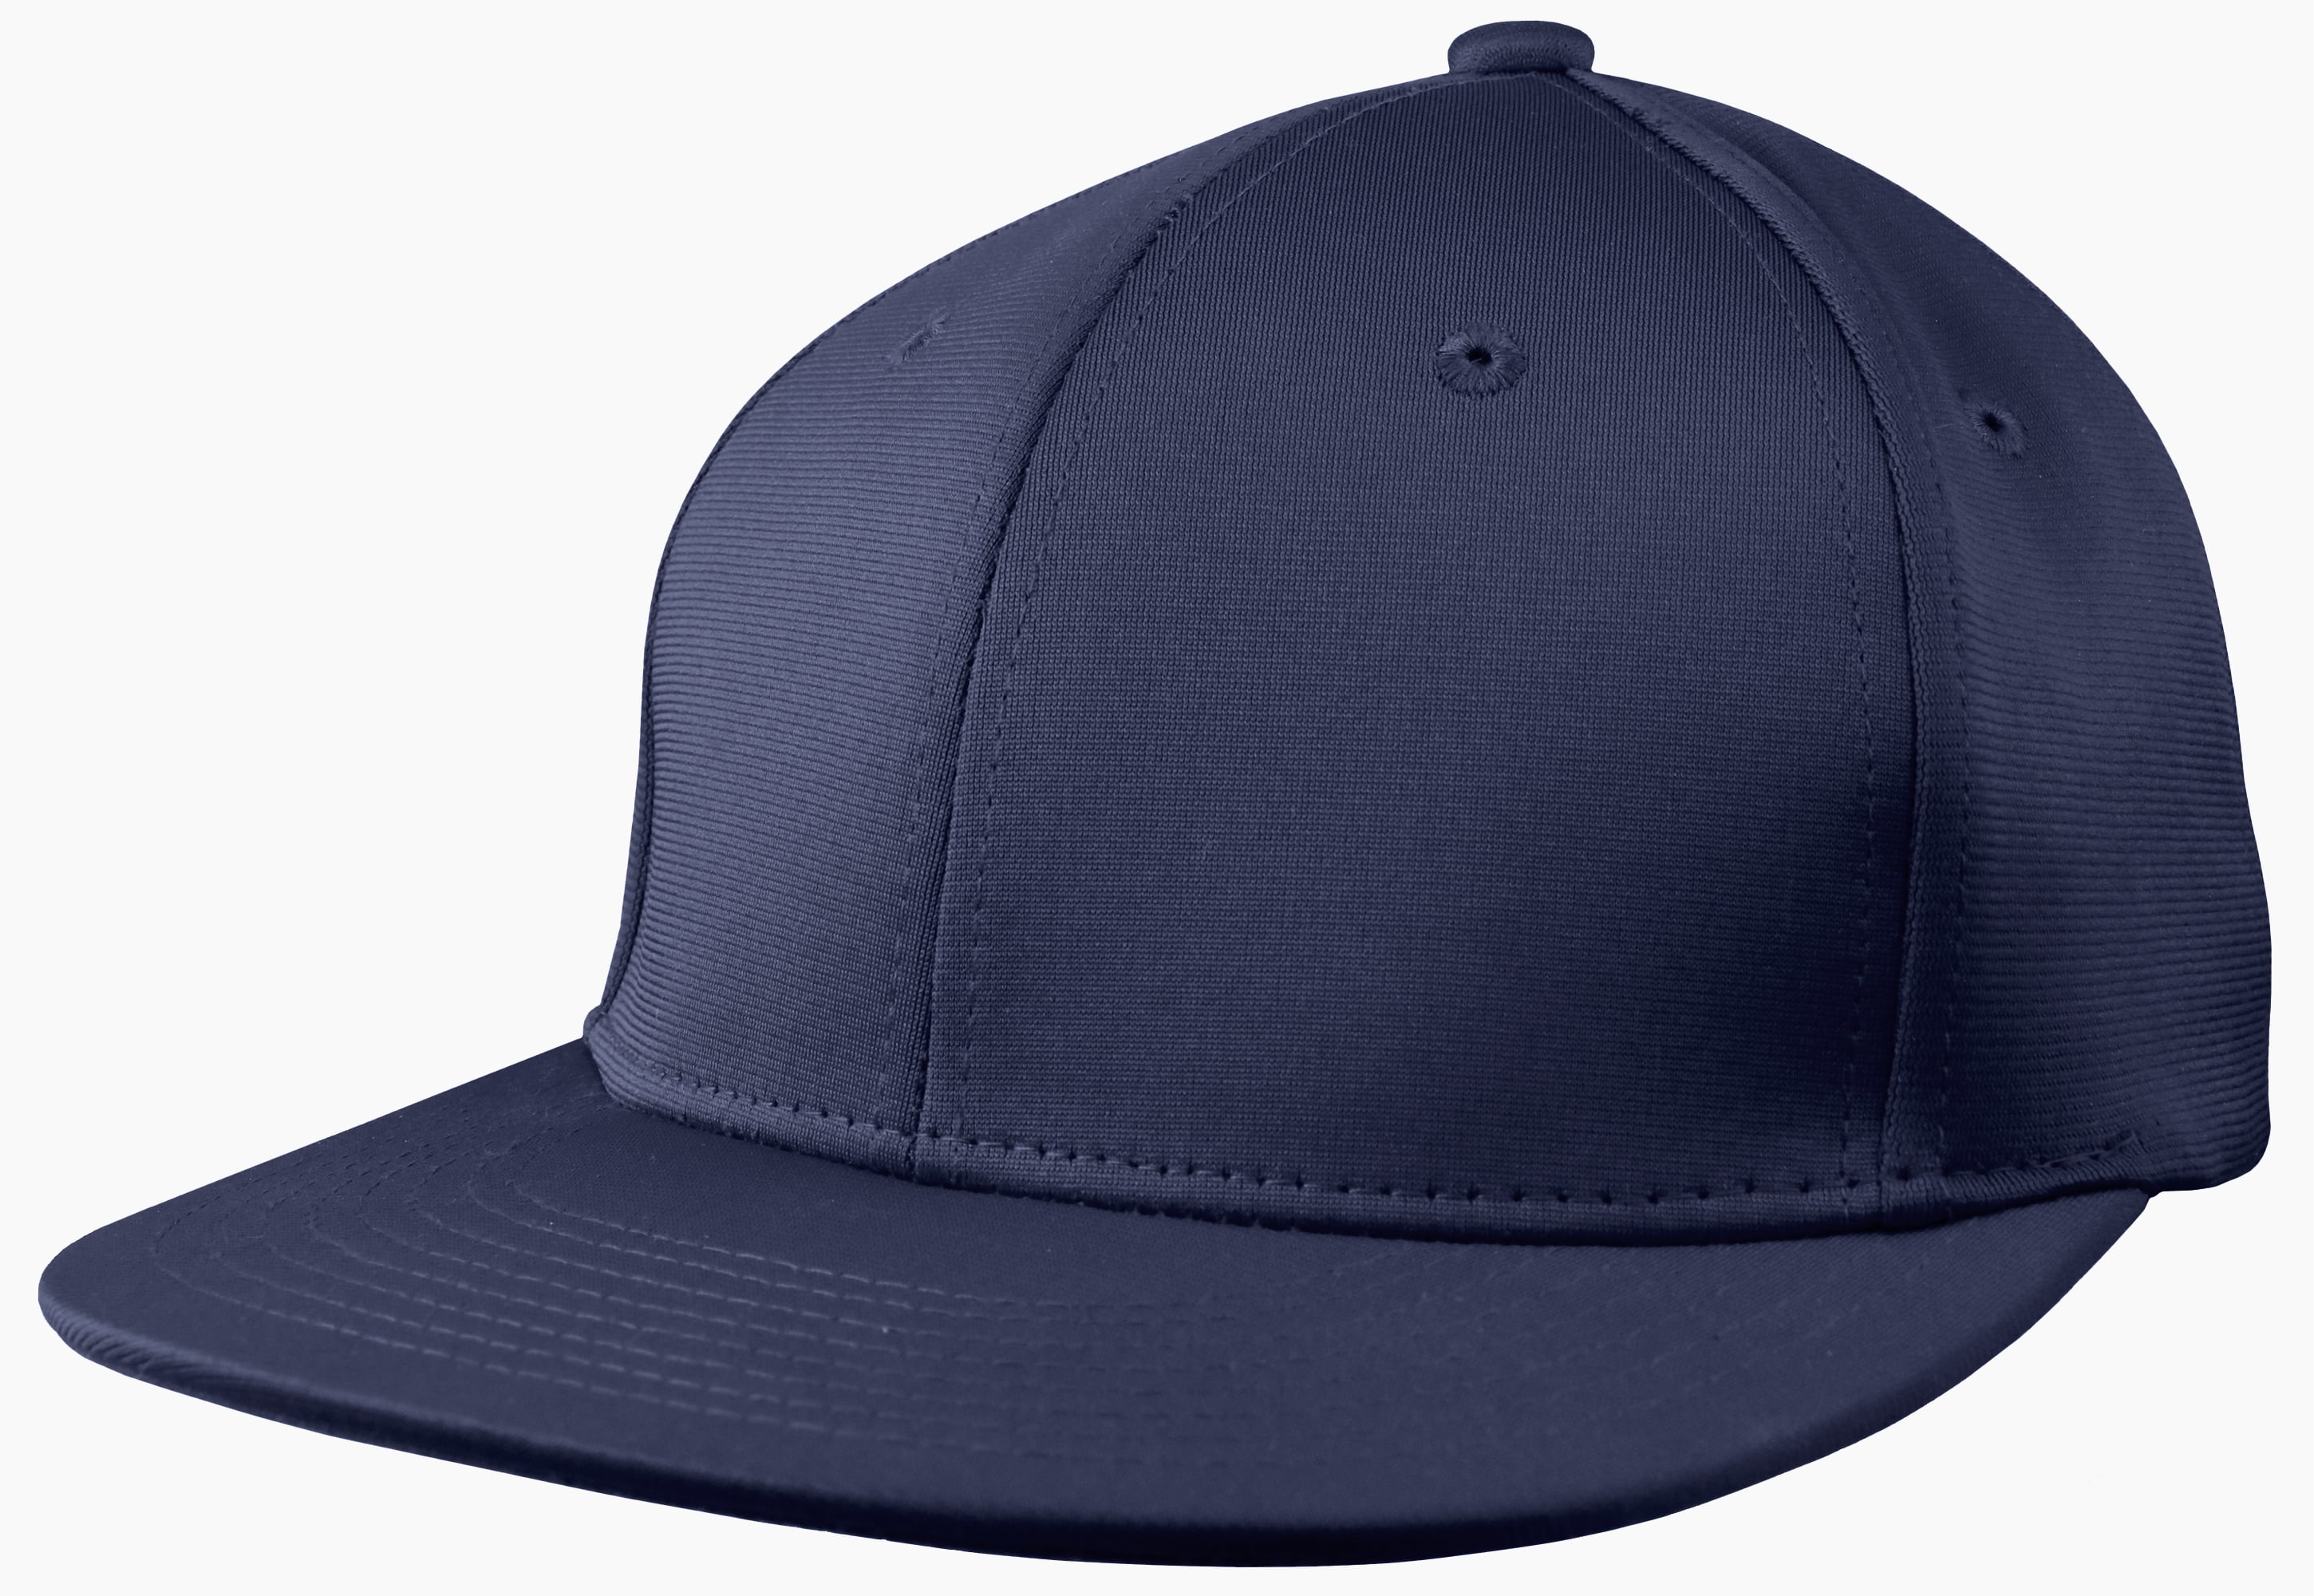 Sweet Stretch 6-Panel Adult Flex-Fit Cap Caps Baseball Profile Low